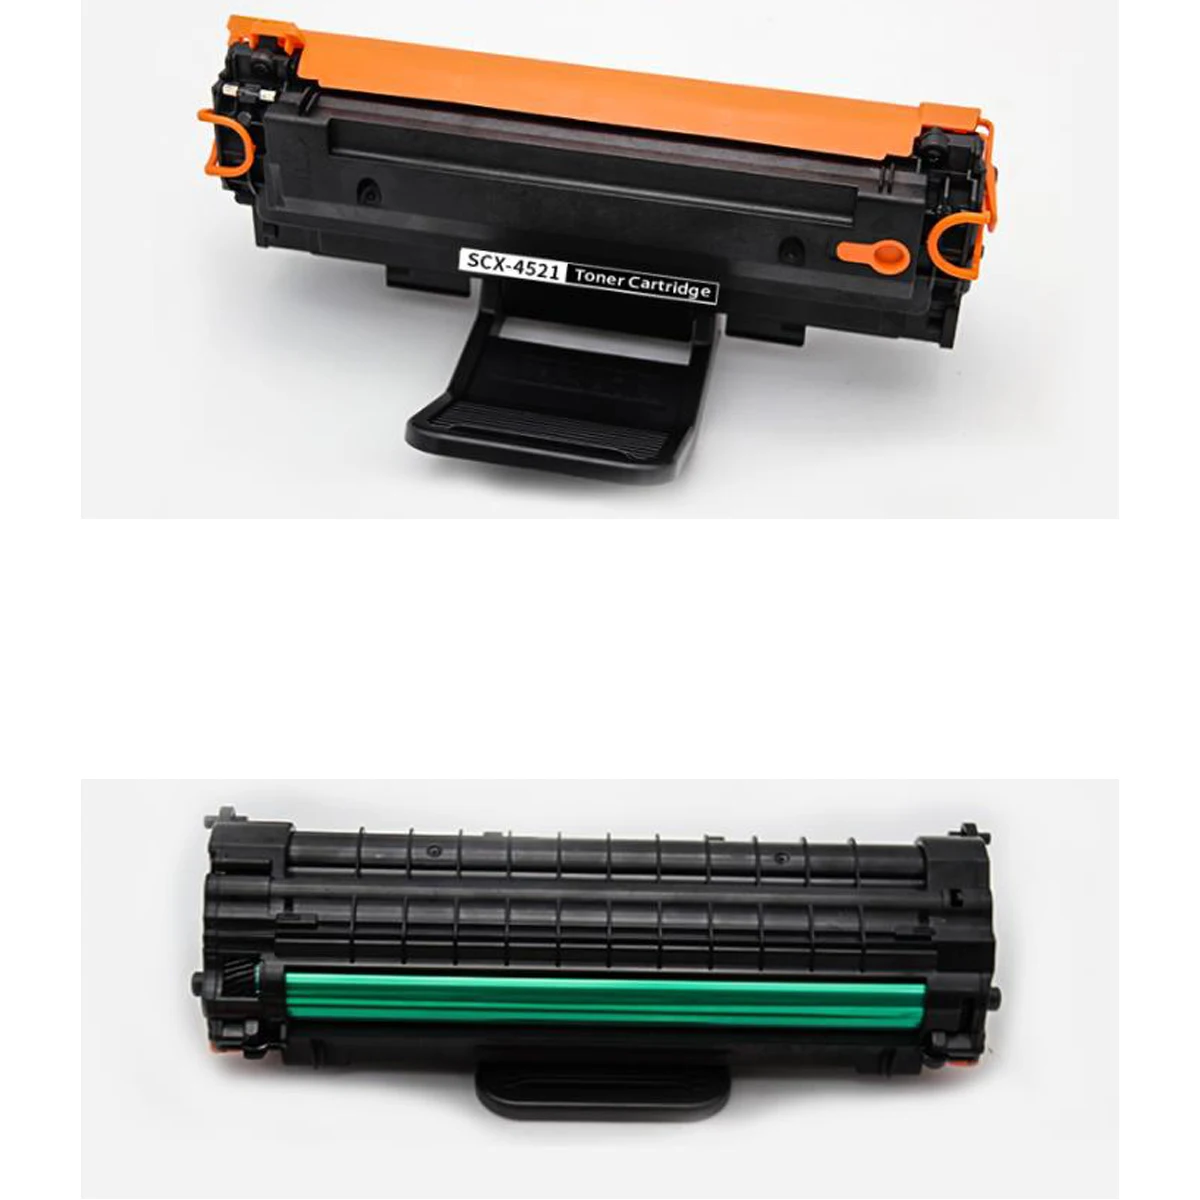 For Samsung MLT-D119S new compatible toner cartridge for Samsung ml-1610/1615/1620/1625/2010/2015/2020/2510/2570/ laser printer